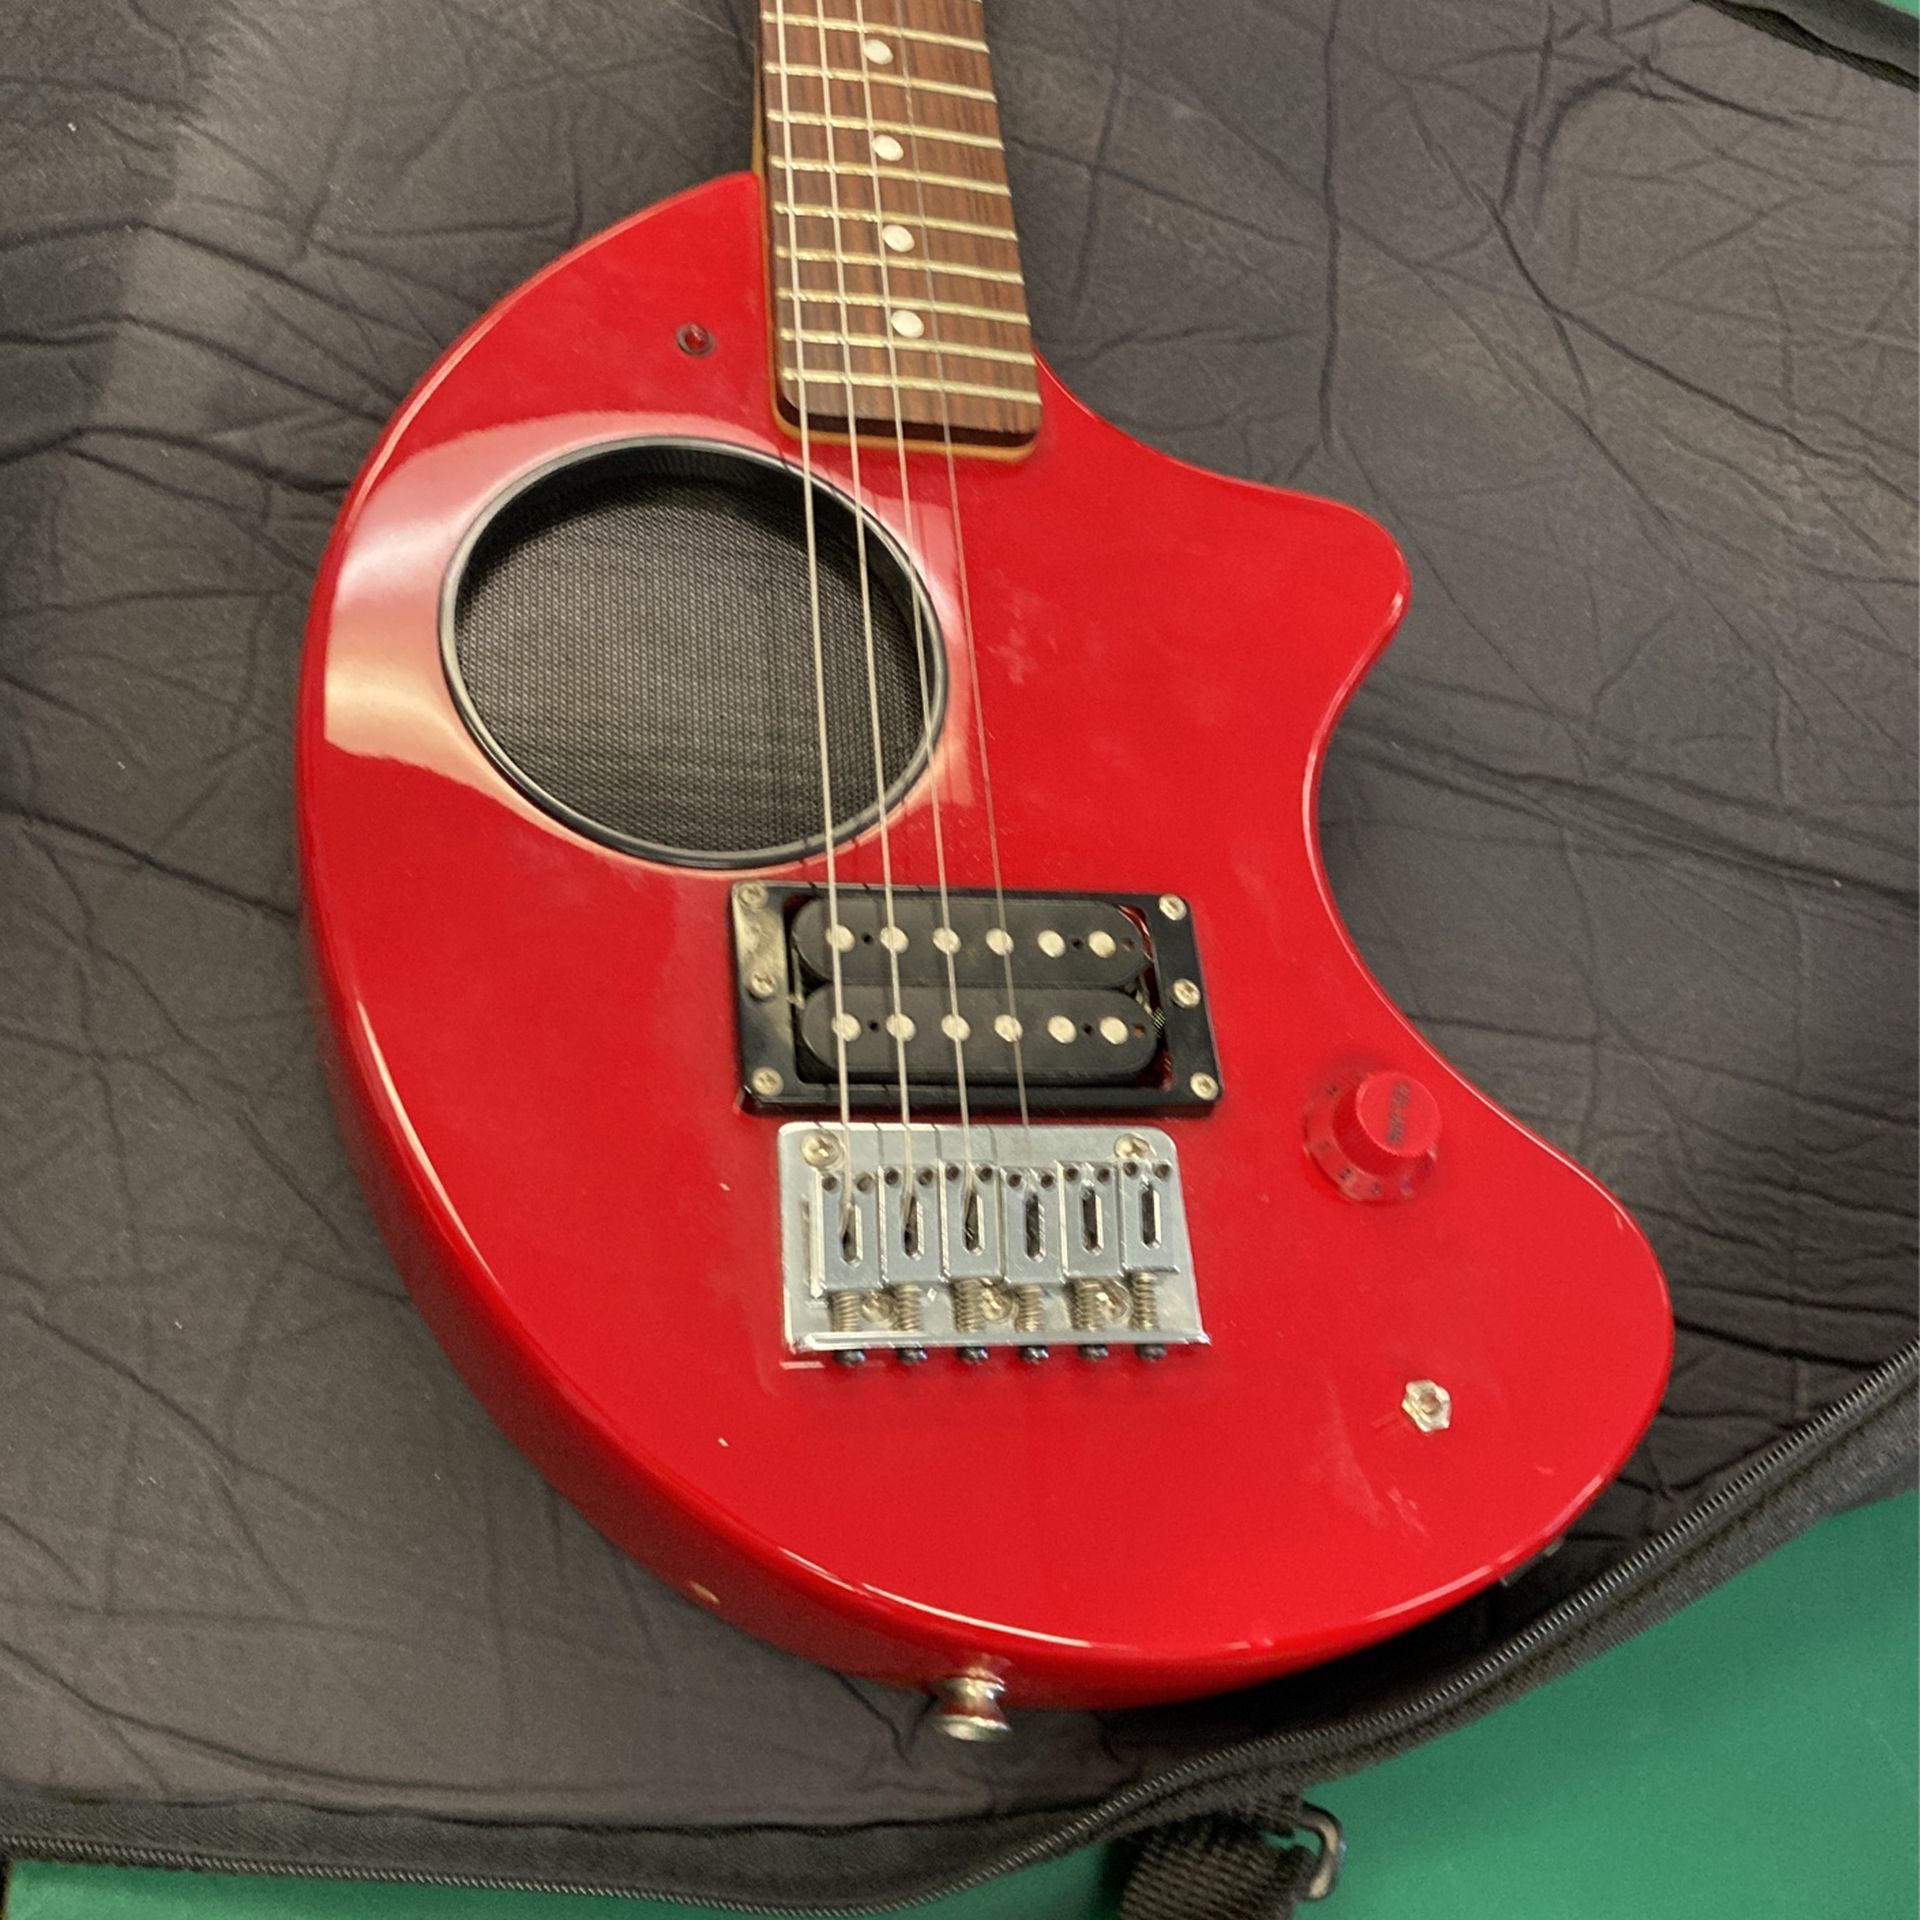 Fernandes ZO-3 Built In Amp Guitar